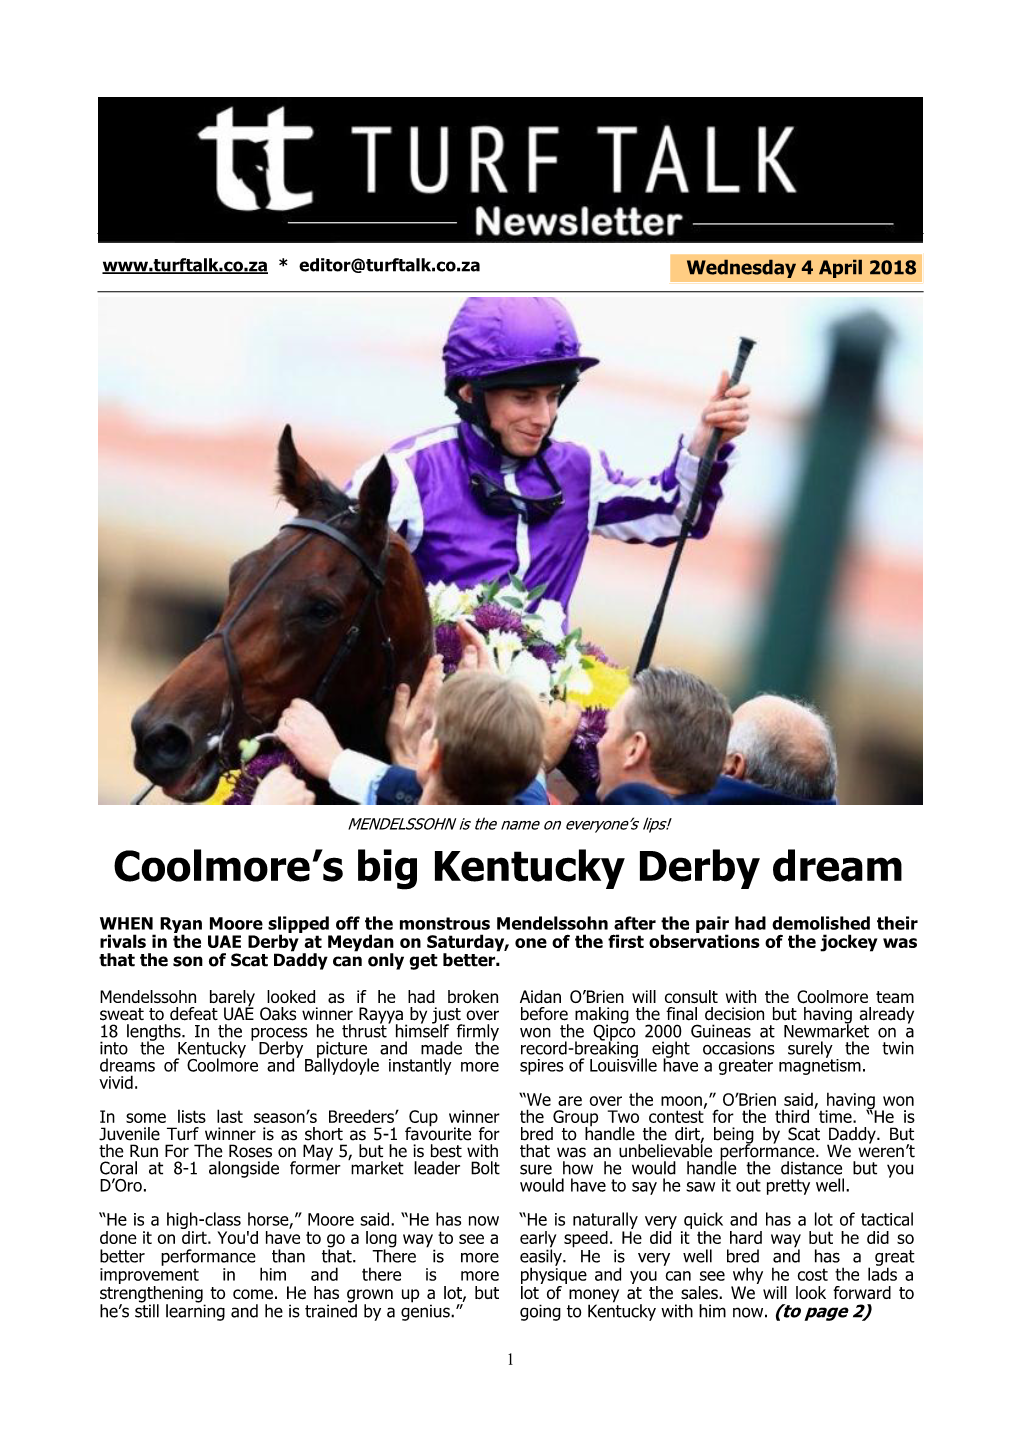 Coolmore's Big Kentucky Derby Dream